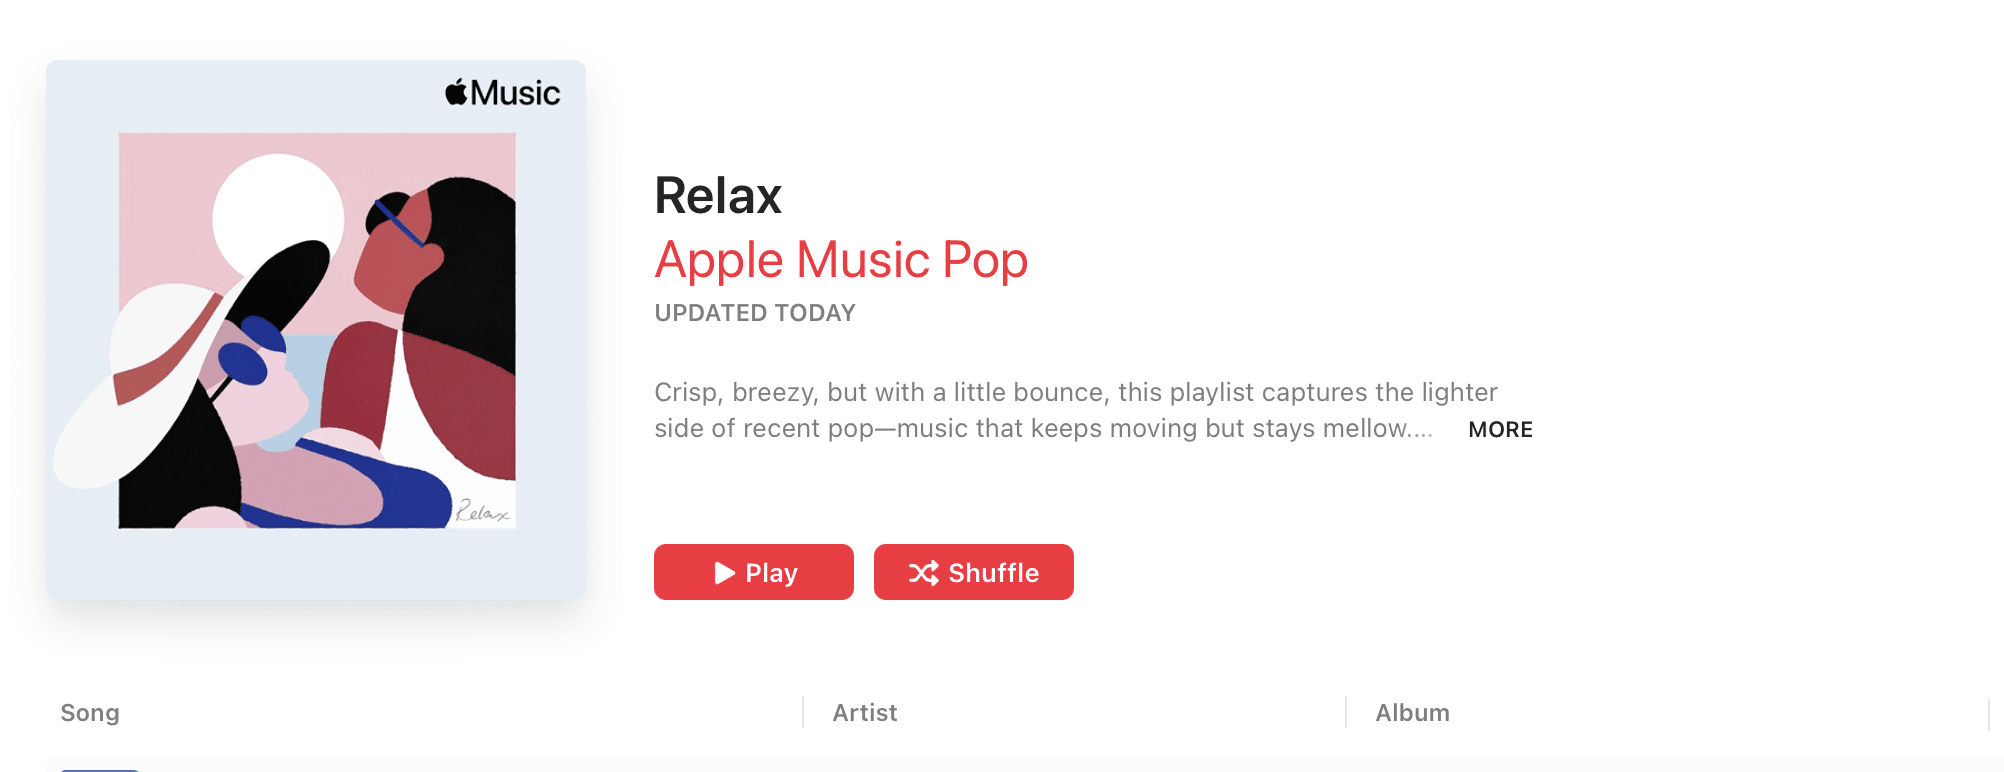 Relax Apple music pop playlist